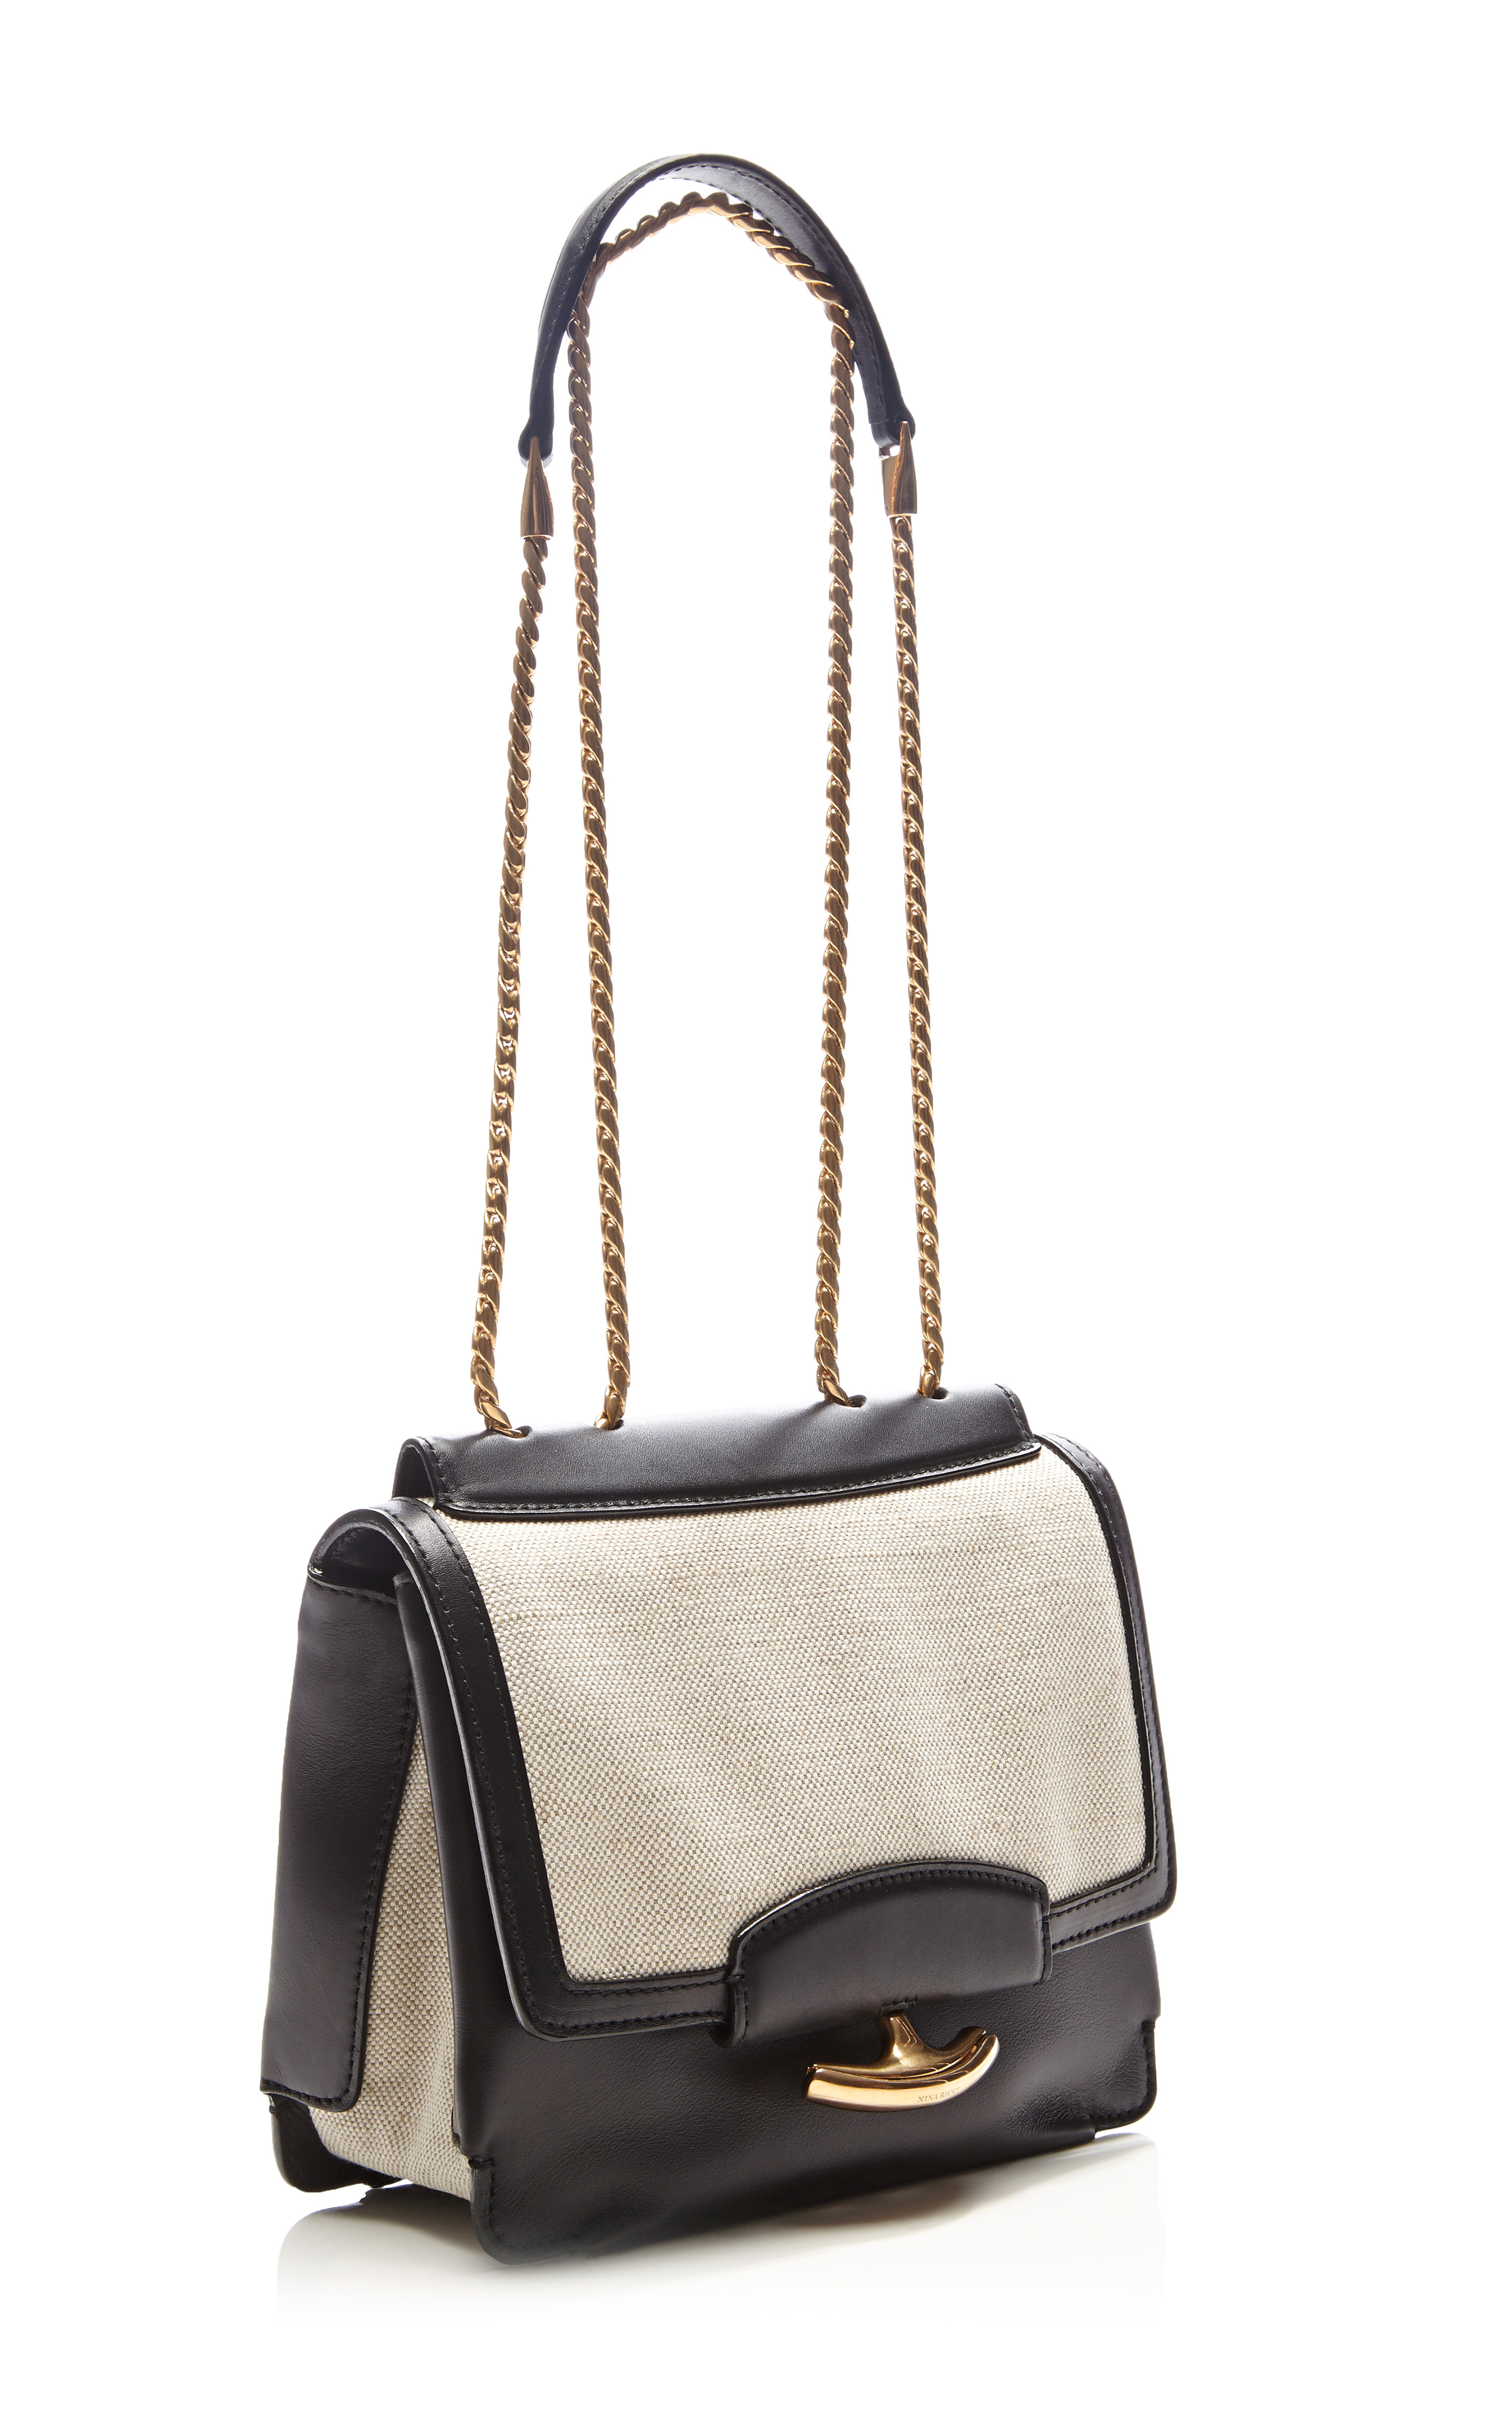 Nina Ricci Gala Leather and Linen Shoulder Bag in Black - Lyst